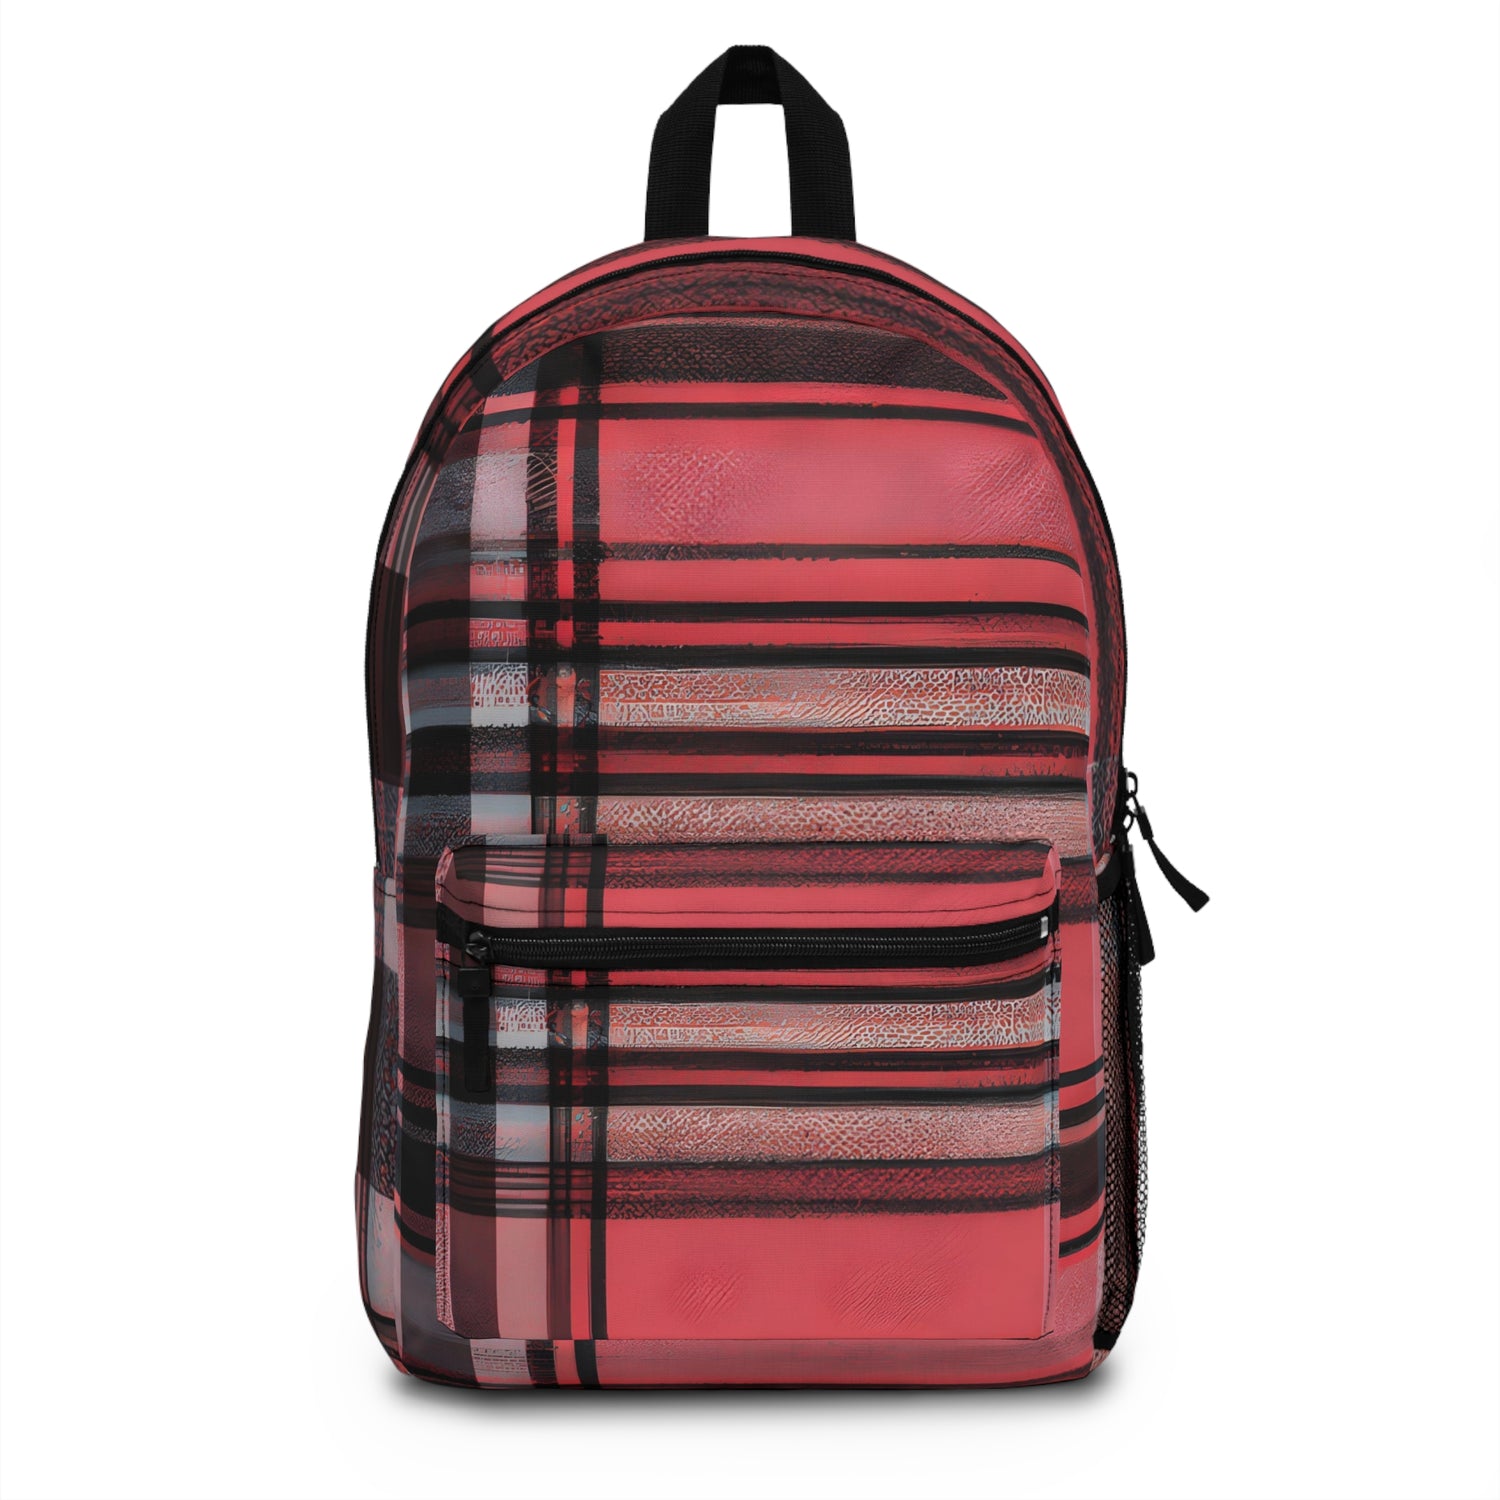 Designer Backpack Collection: Artistic & Functional Bags for the Modern Trendsetter